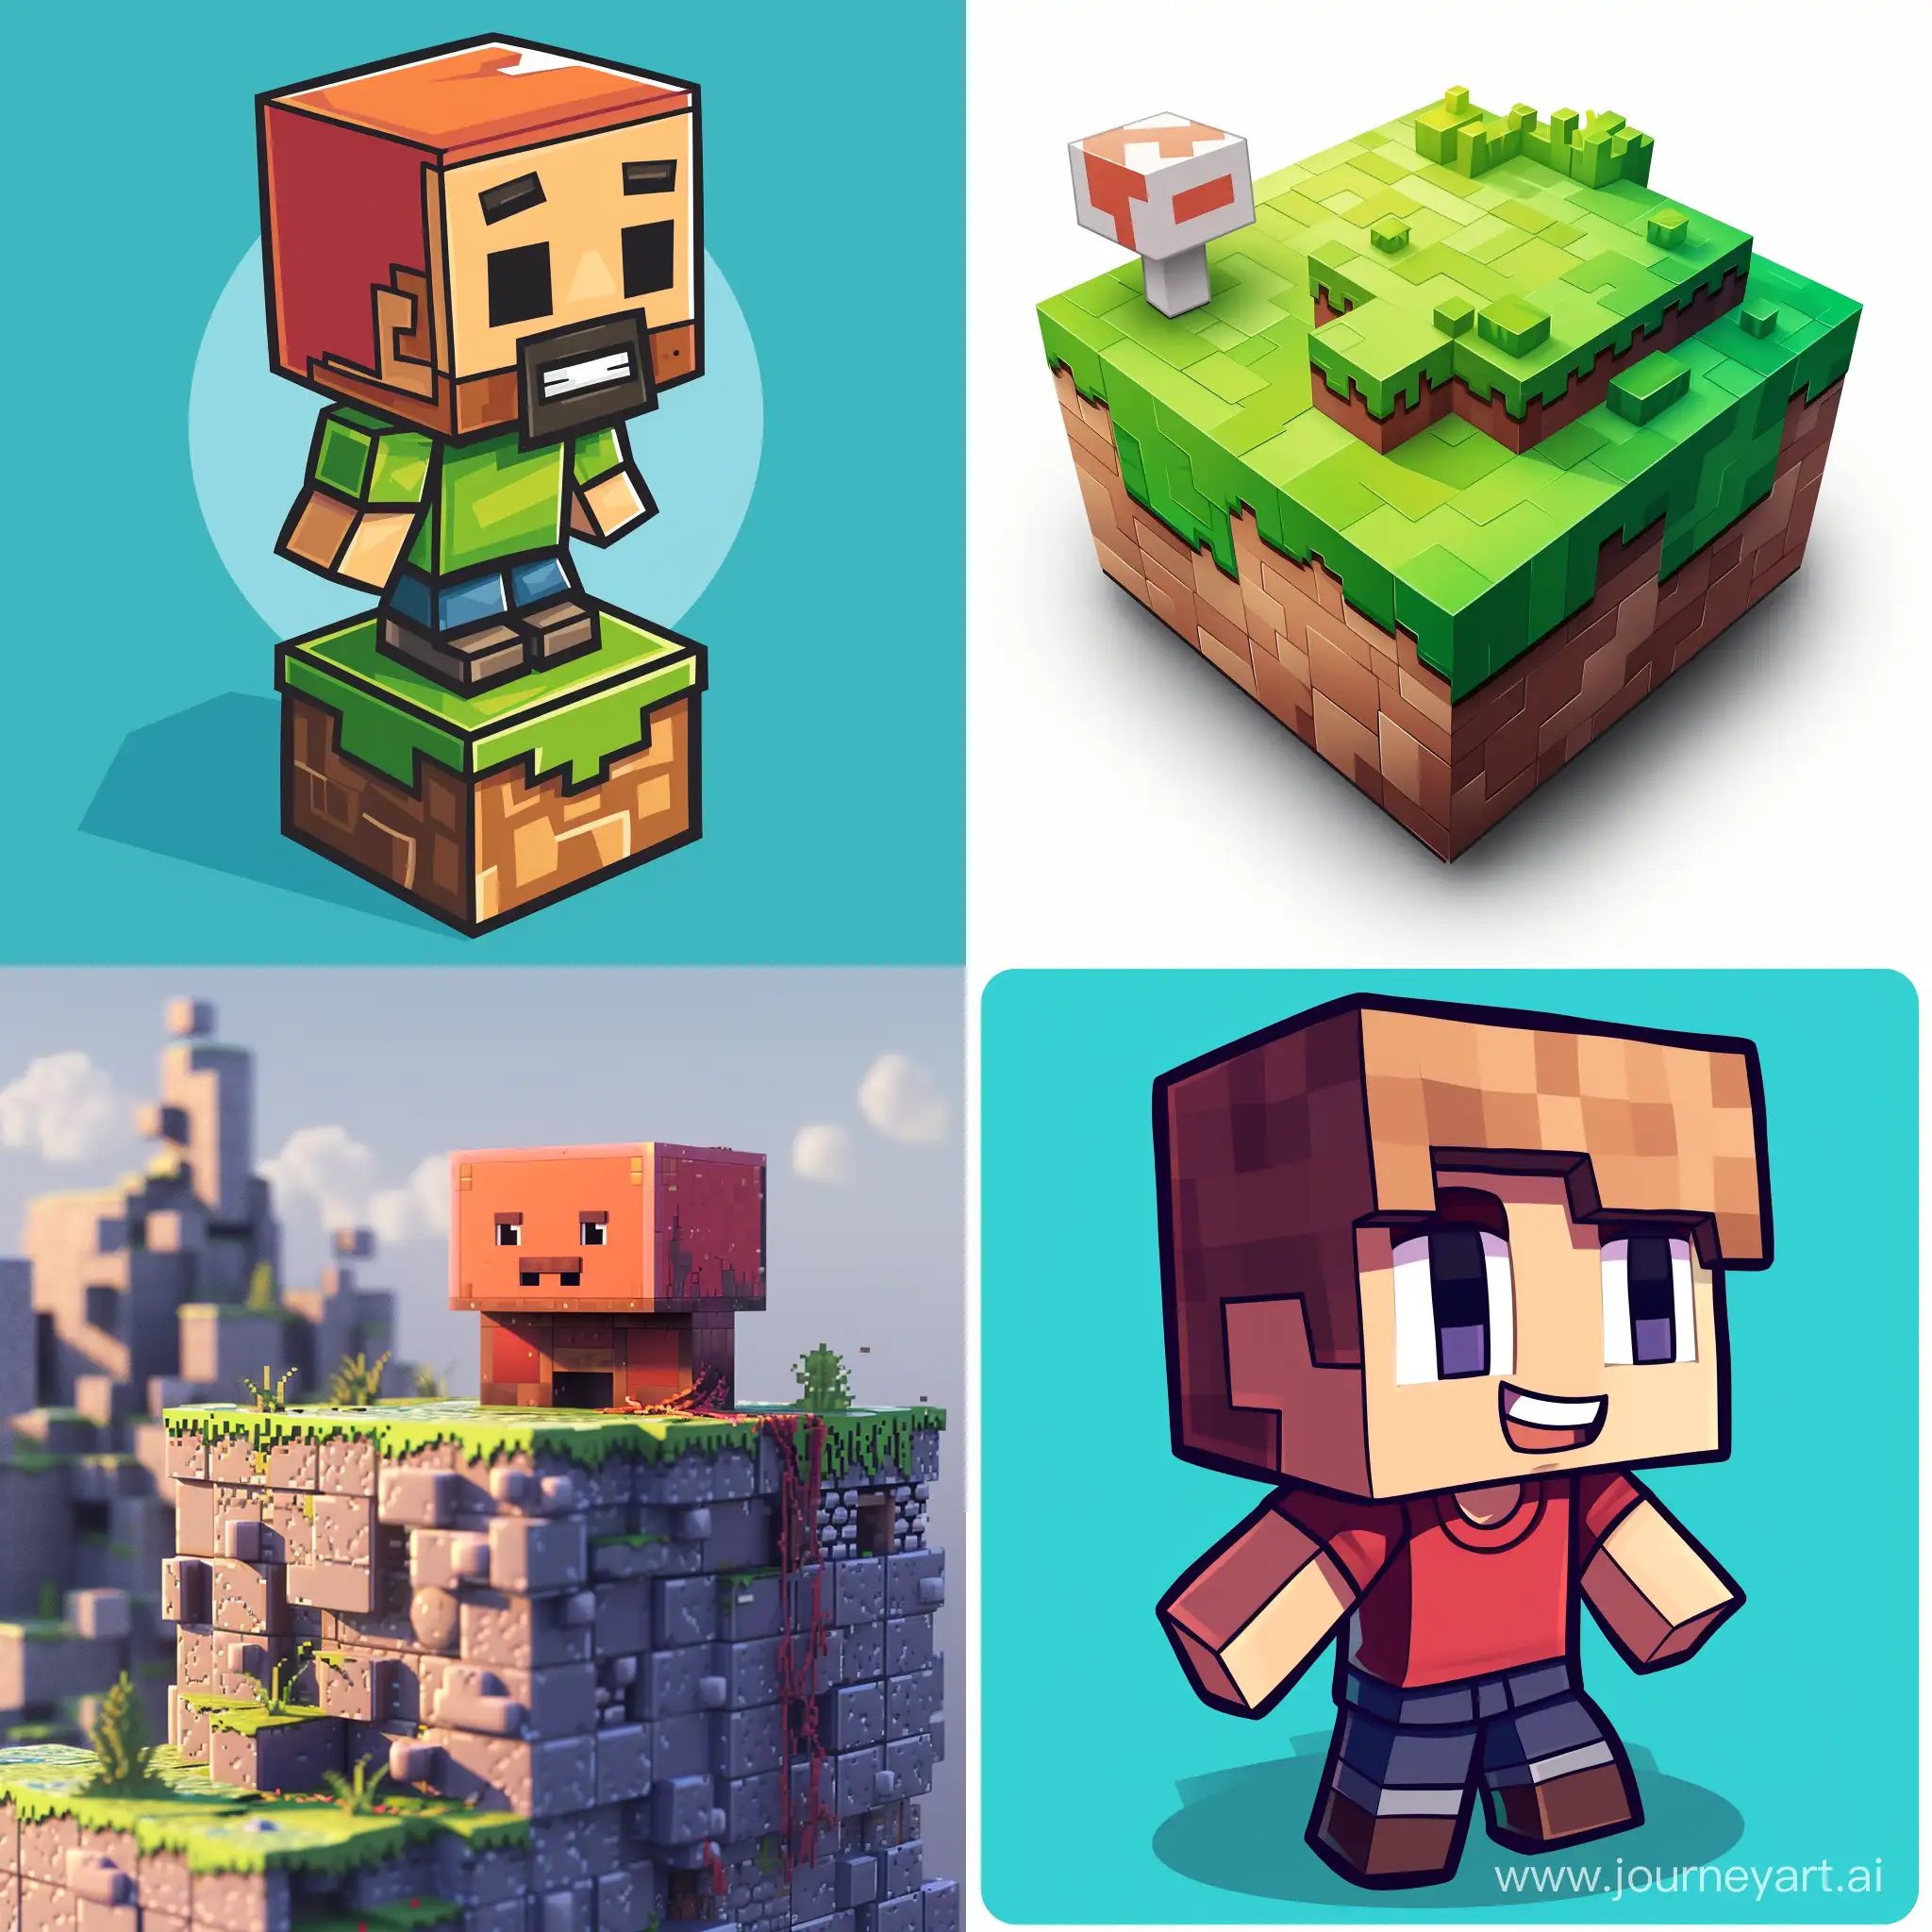 Creative-Toony-Minecraft-Logo-Design-Fun-16Bit-Block-Art